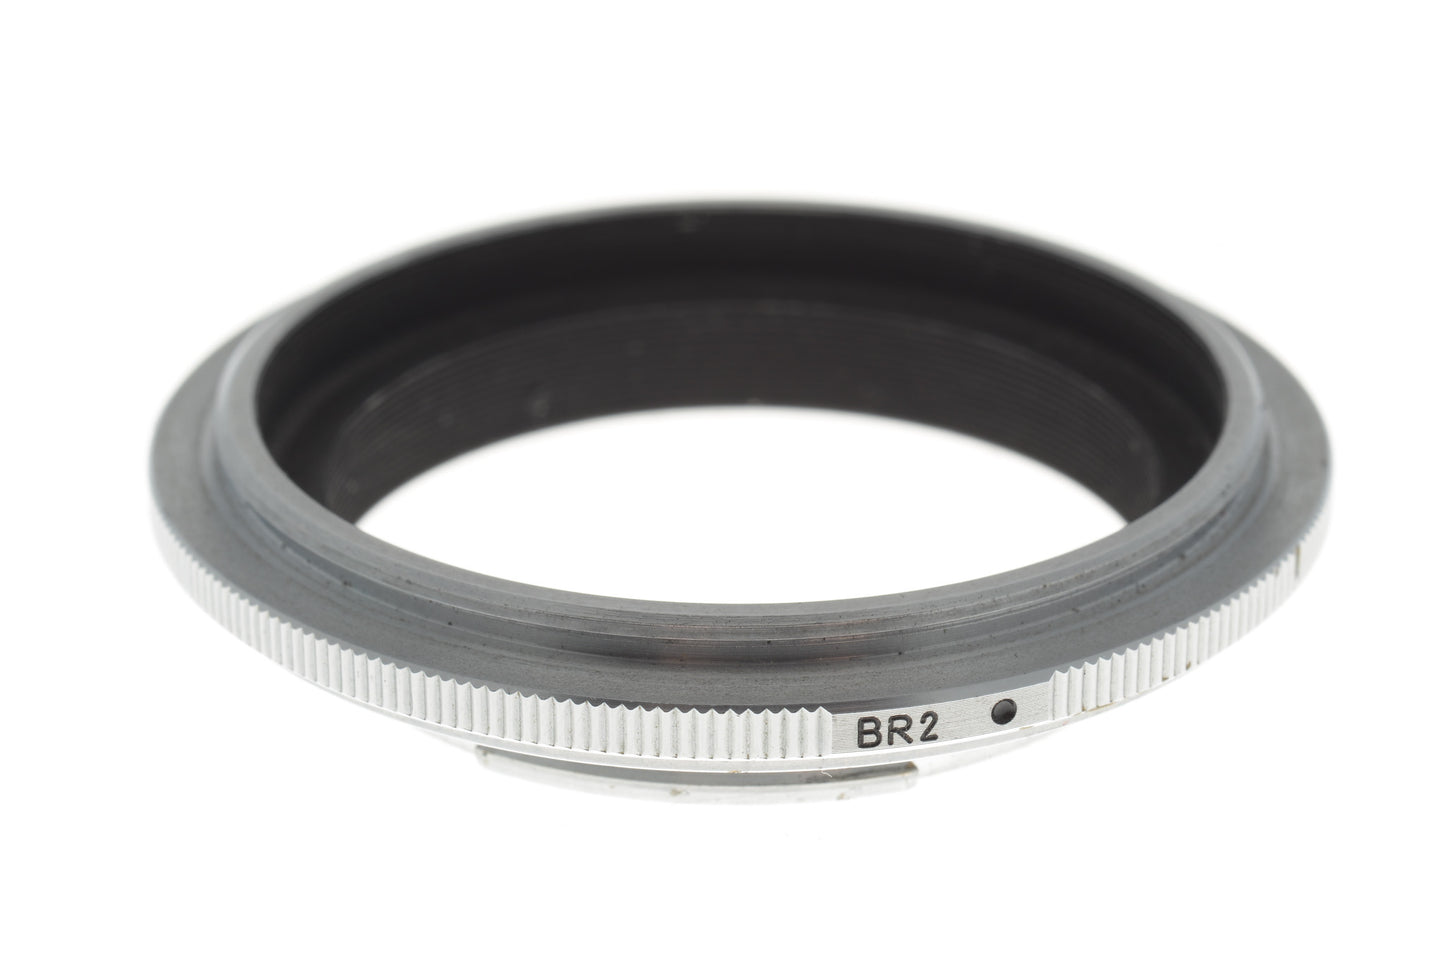 Nikon BR-2 Macro Adapter Ring - Accessory